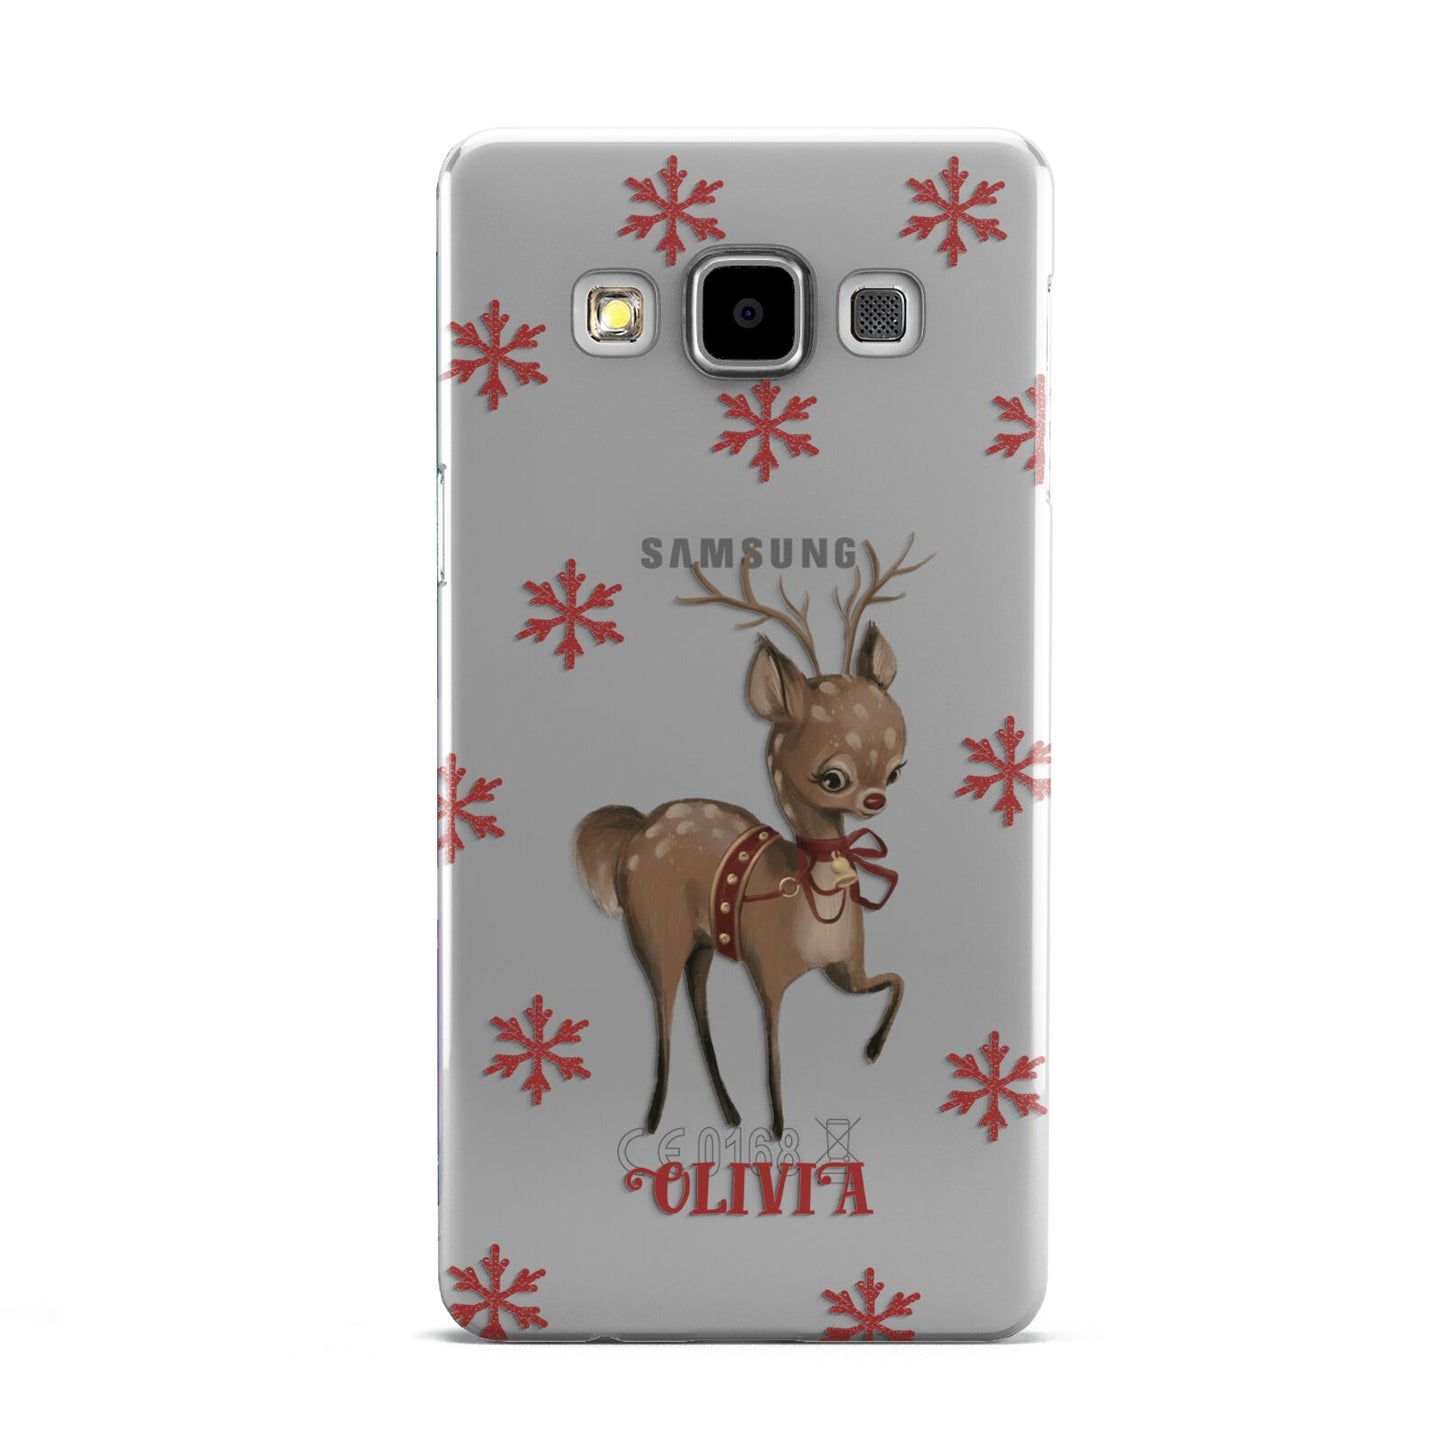 Rudolph Delivery Samsung Galaxy A5 Case